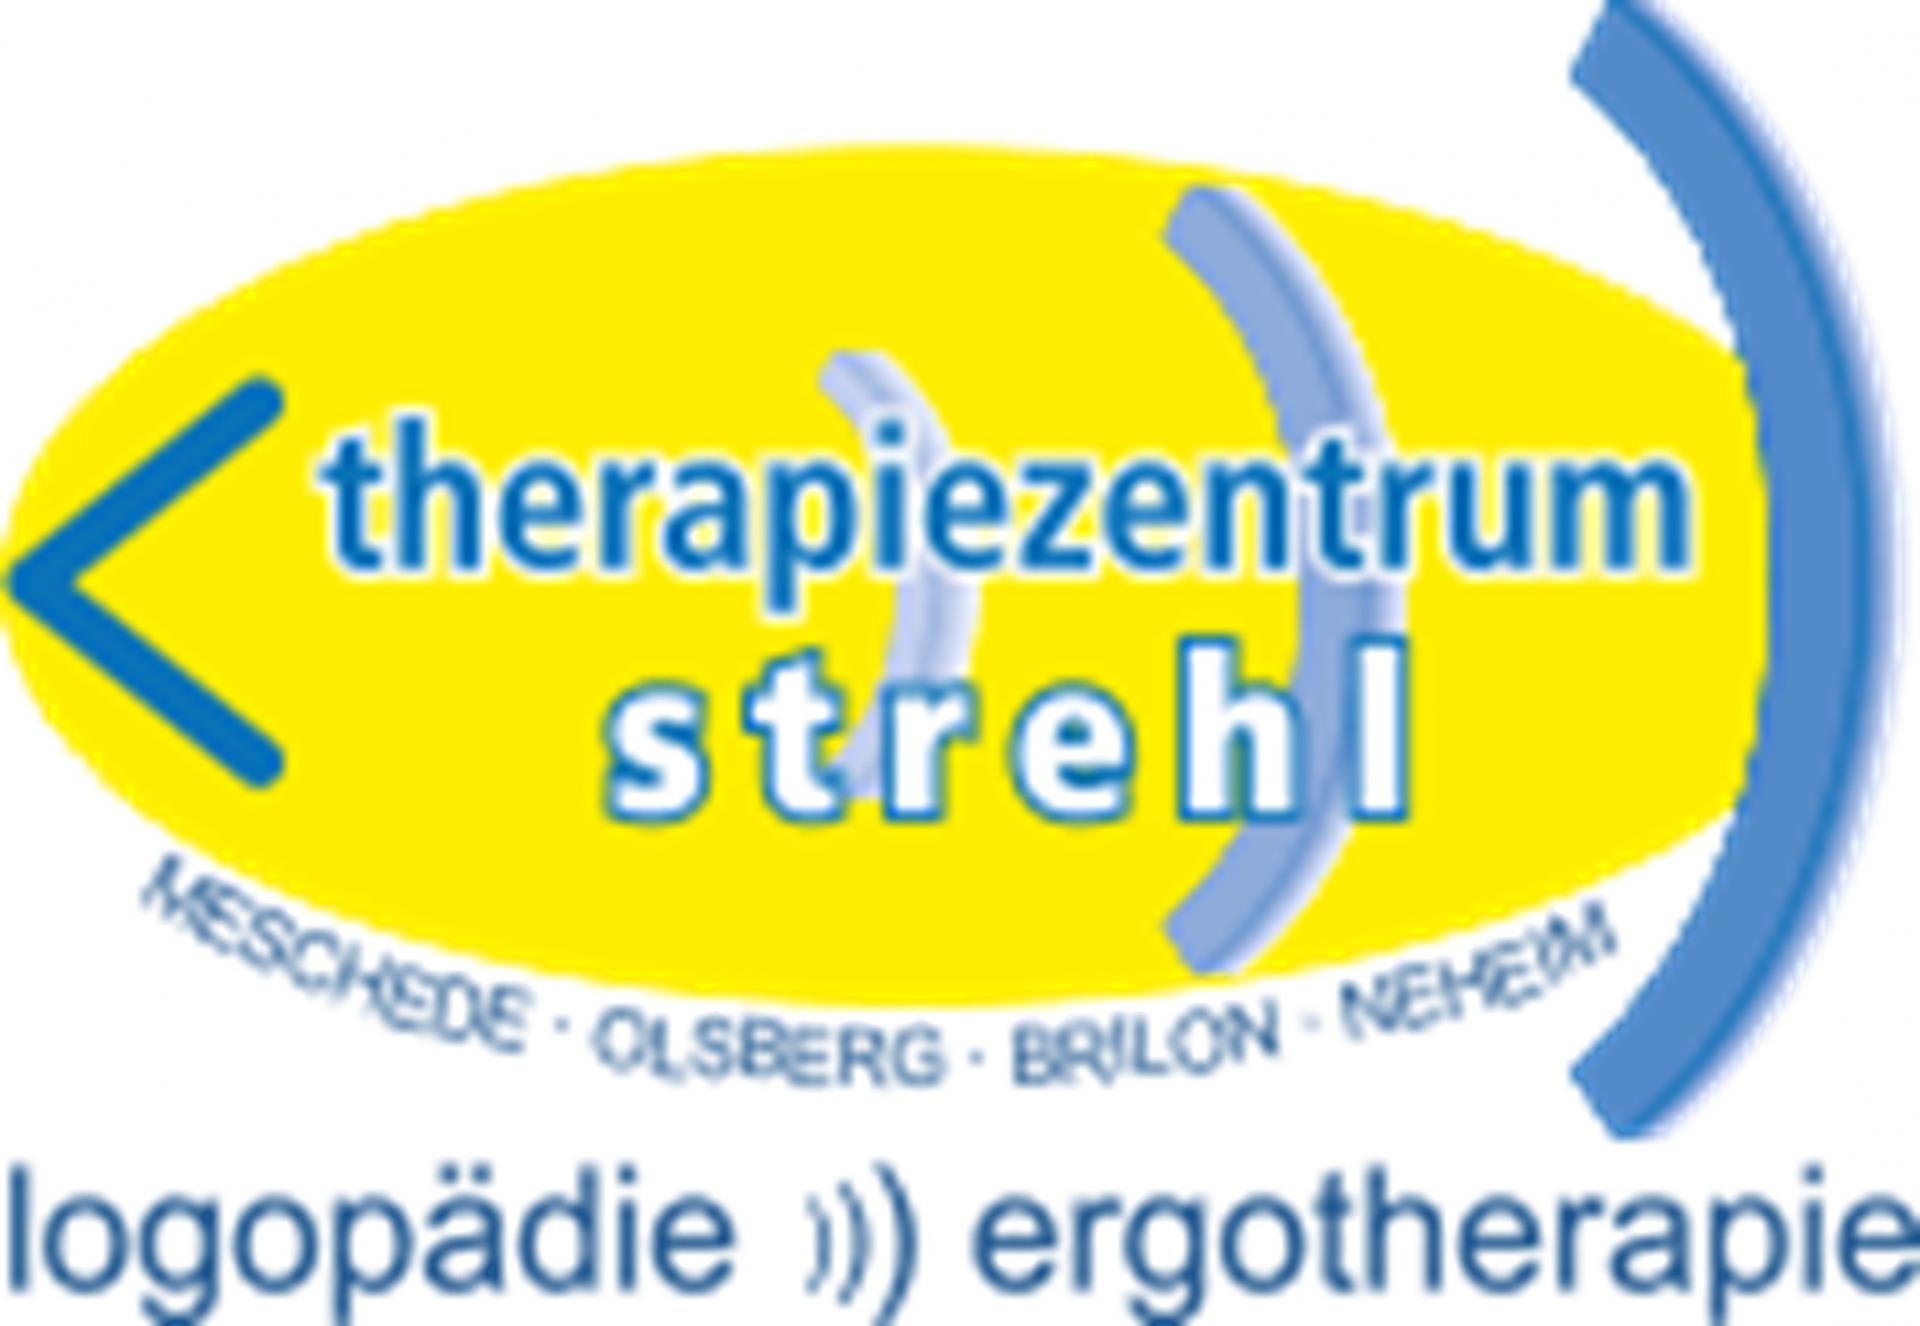 Therapiezentrum Strehl